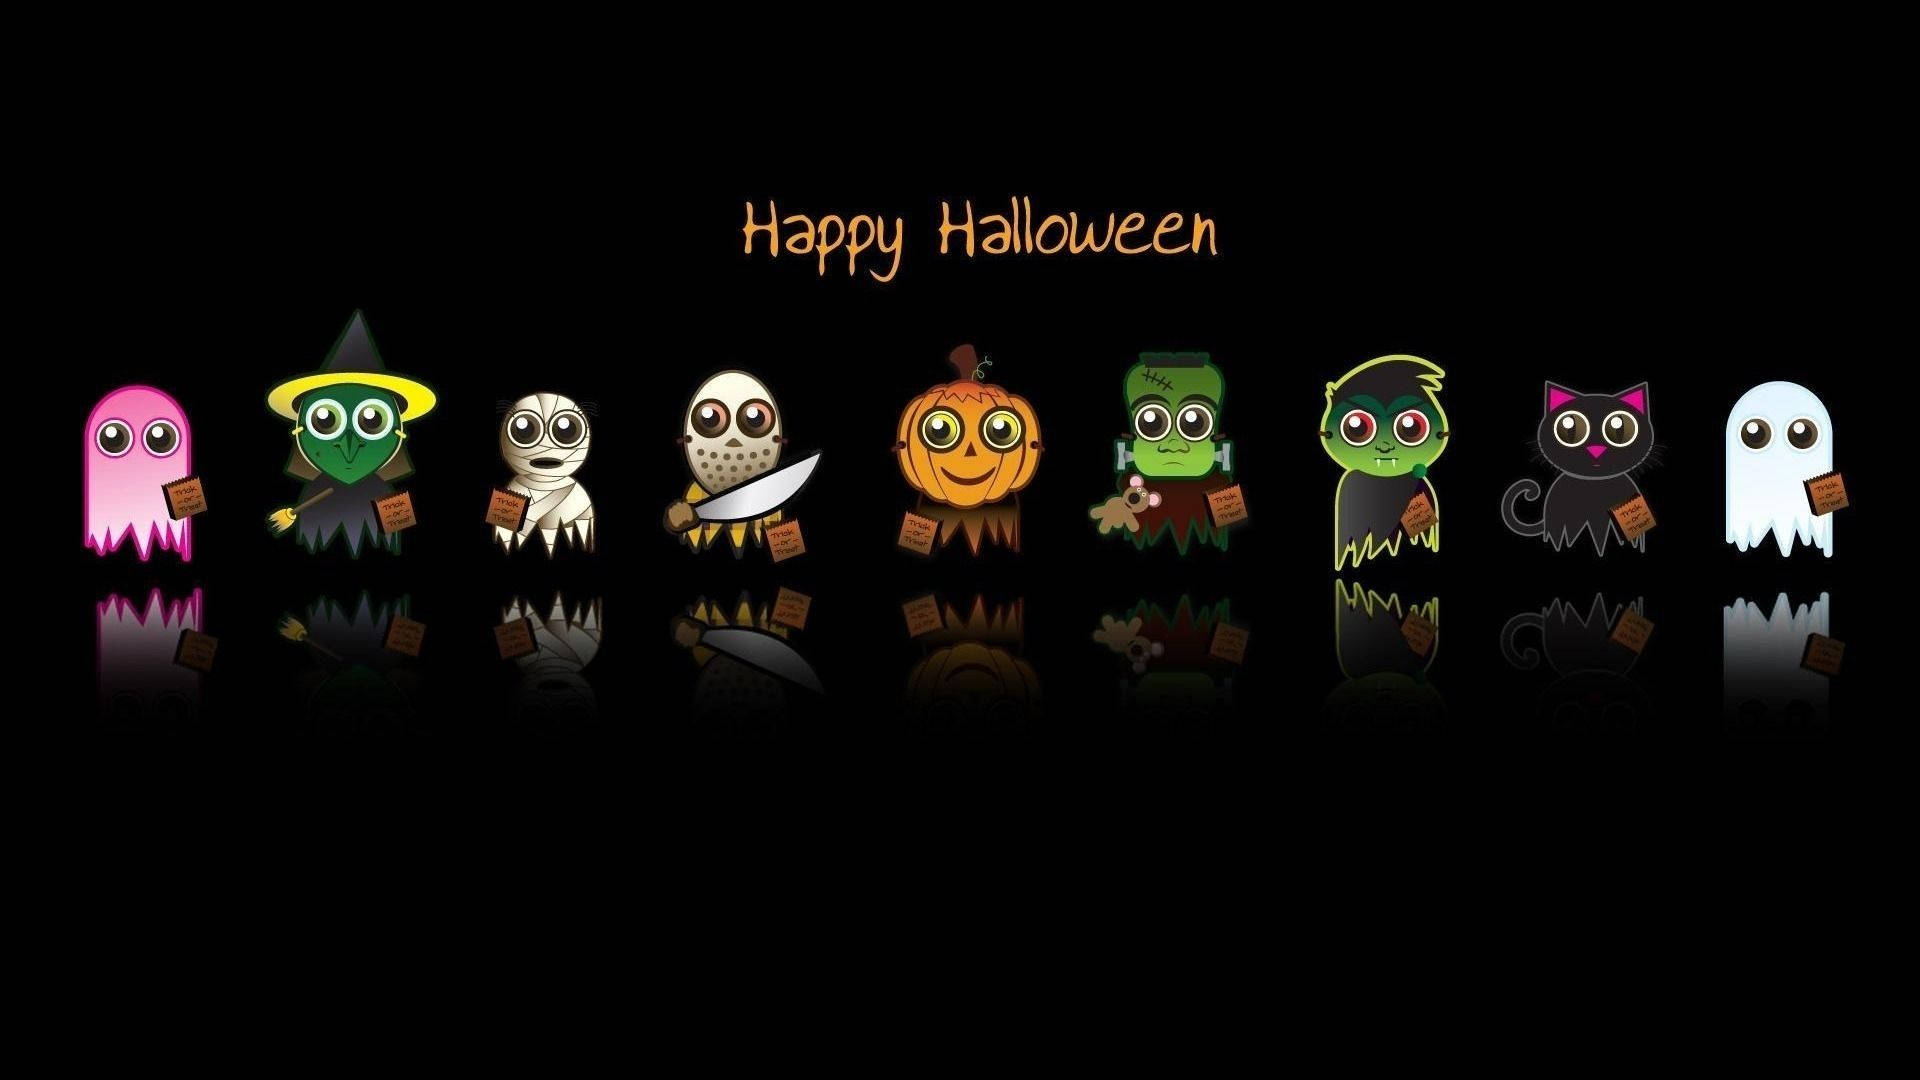 Free Halloween Wallpaper Downloads, [500+] Halloween Wallpapers for FREE |  